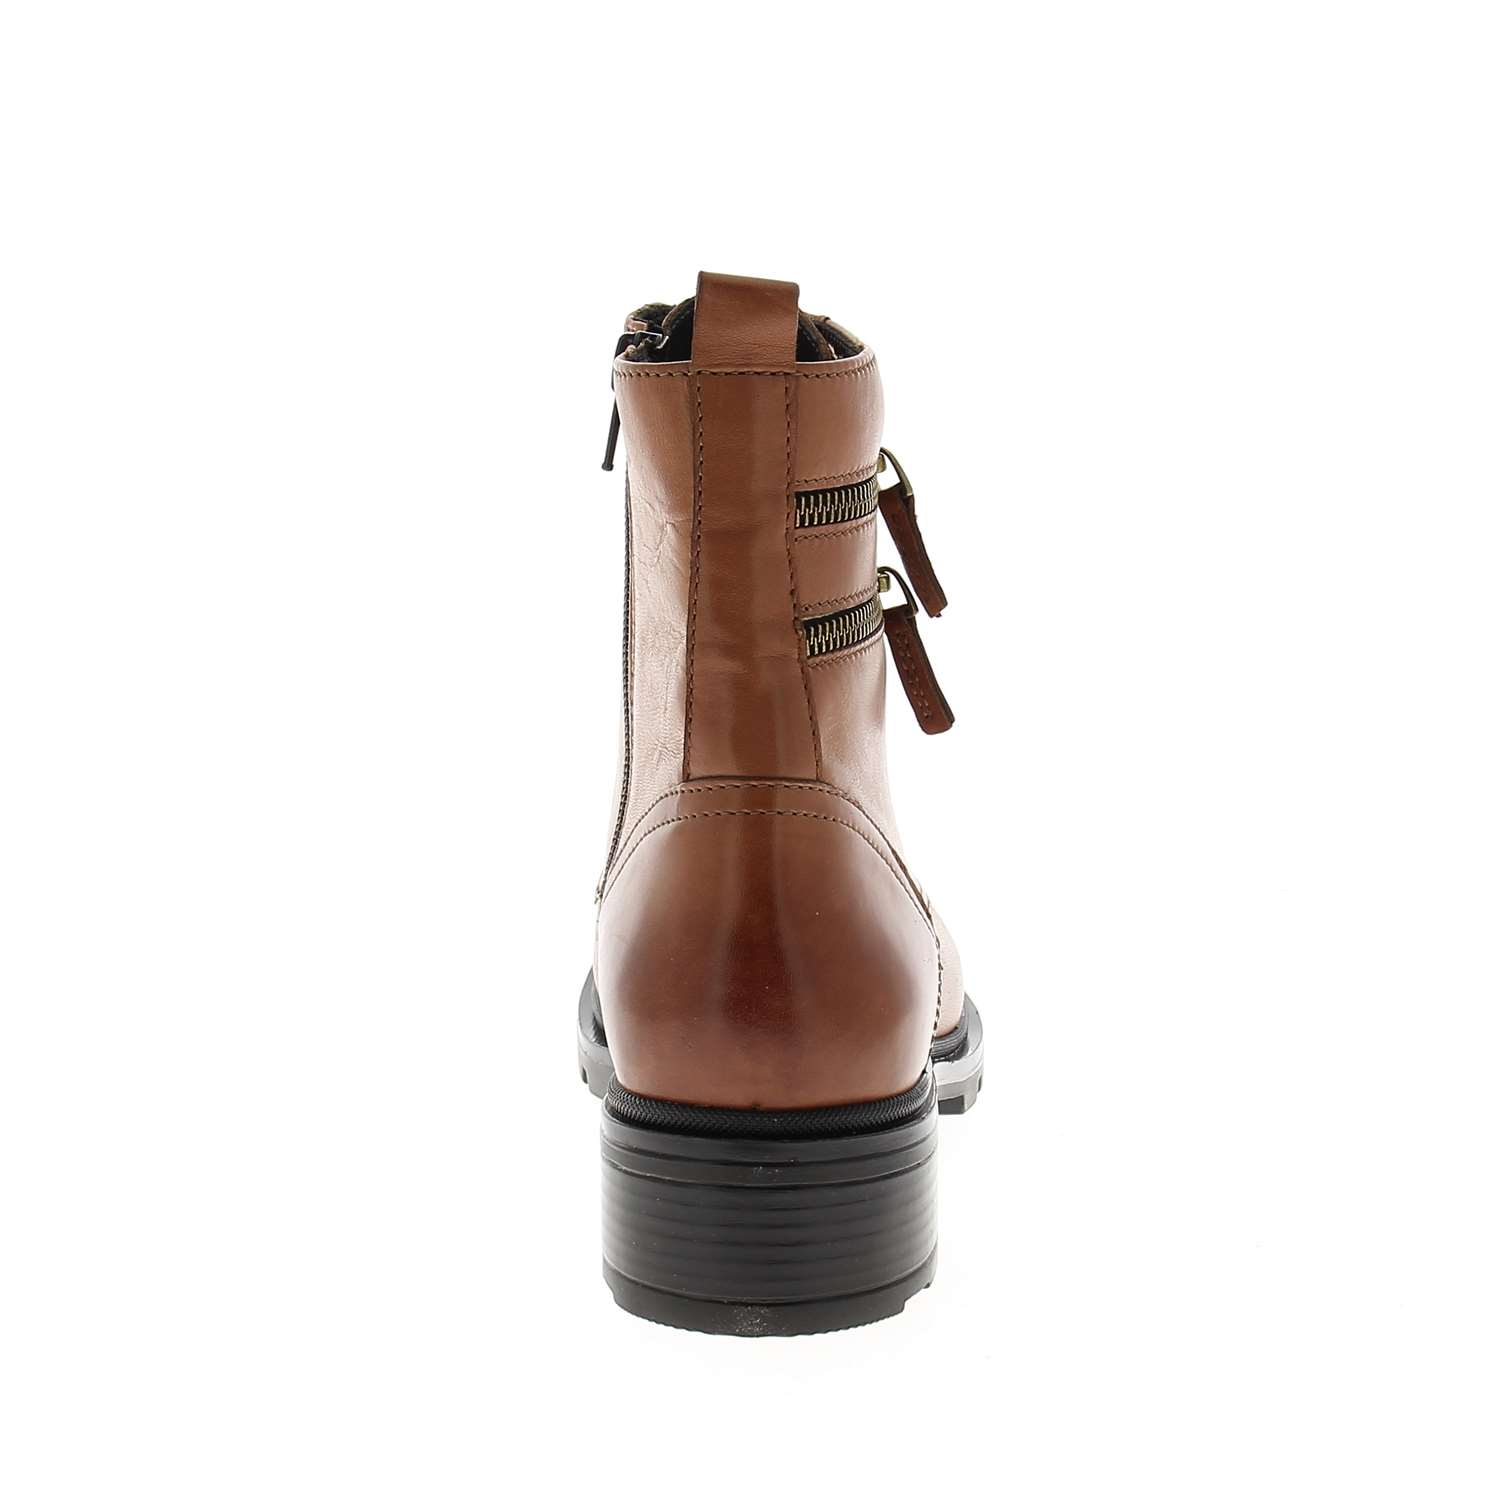 04 - APALE - XAPI - Boots et bottines - Cuir